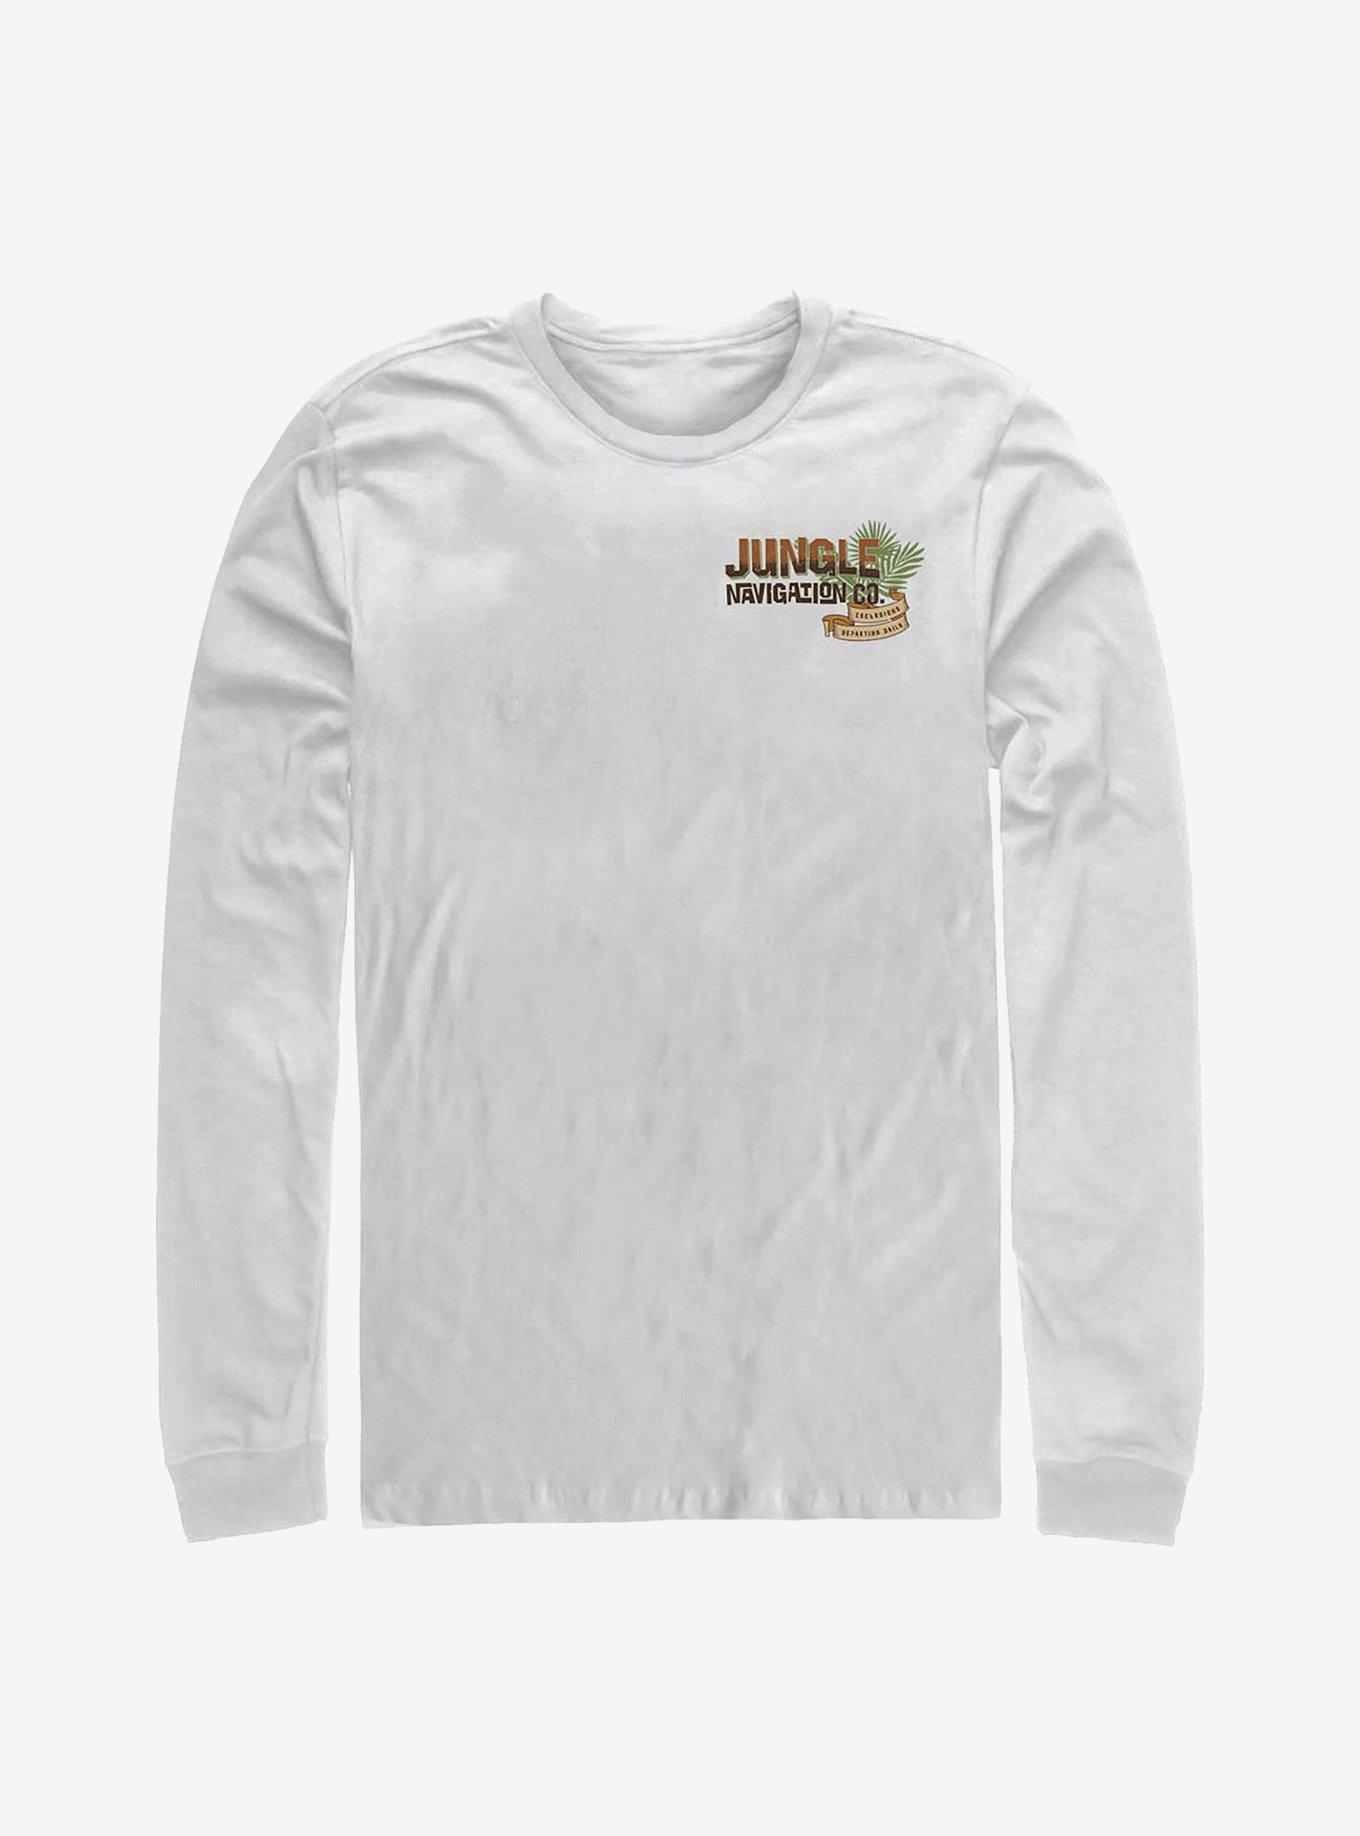 Disney Jungle Cruise Jungle Navigation Co. Long-Sleeve T-Shirt, WHITE, hi-res